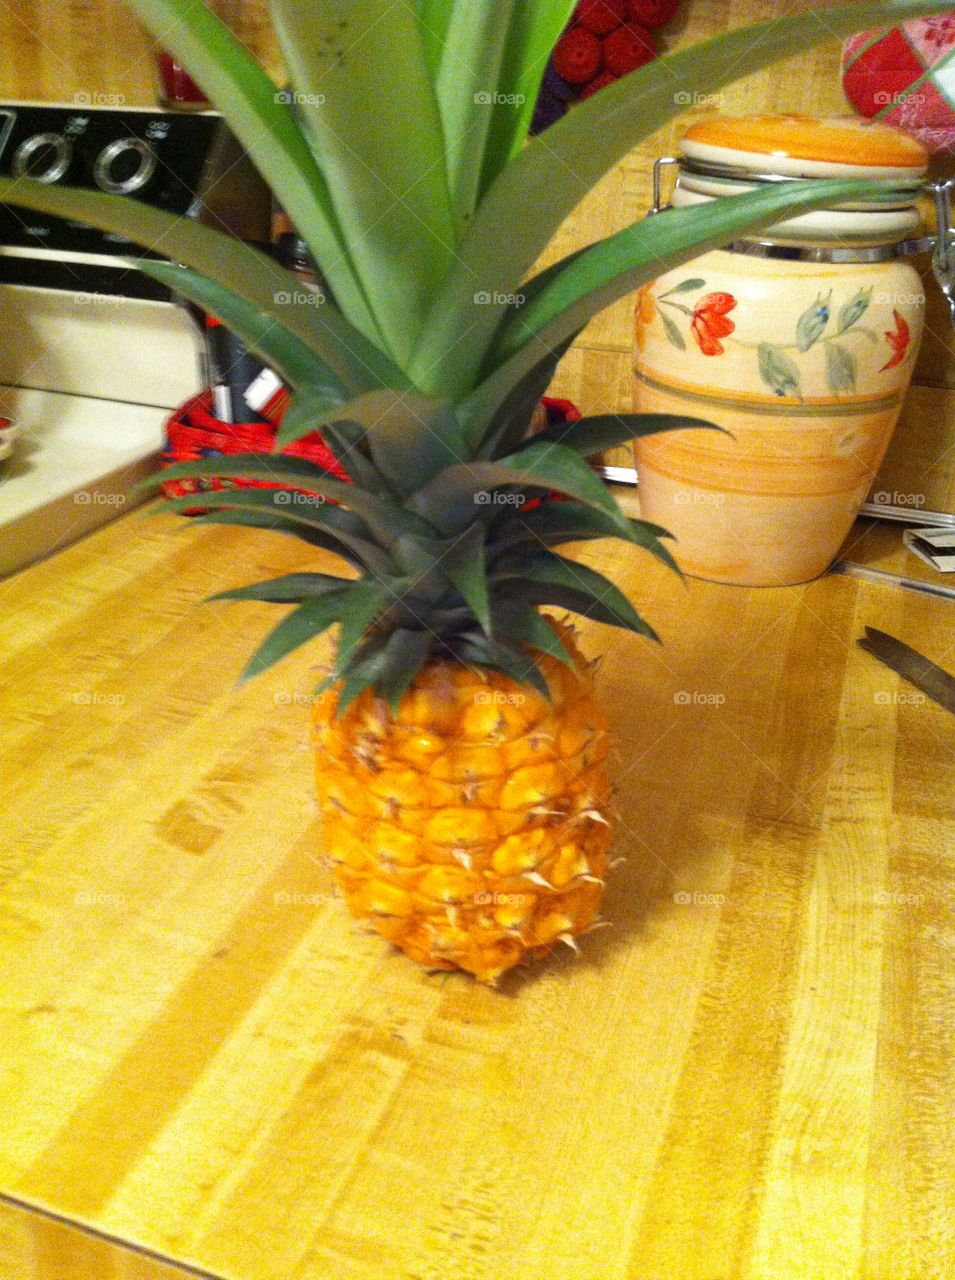 Home grown pineapple